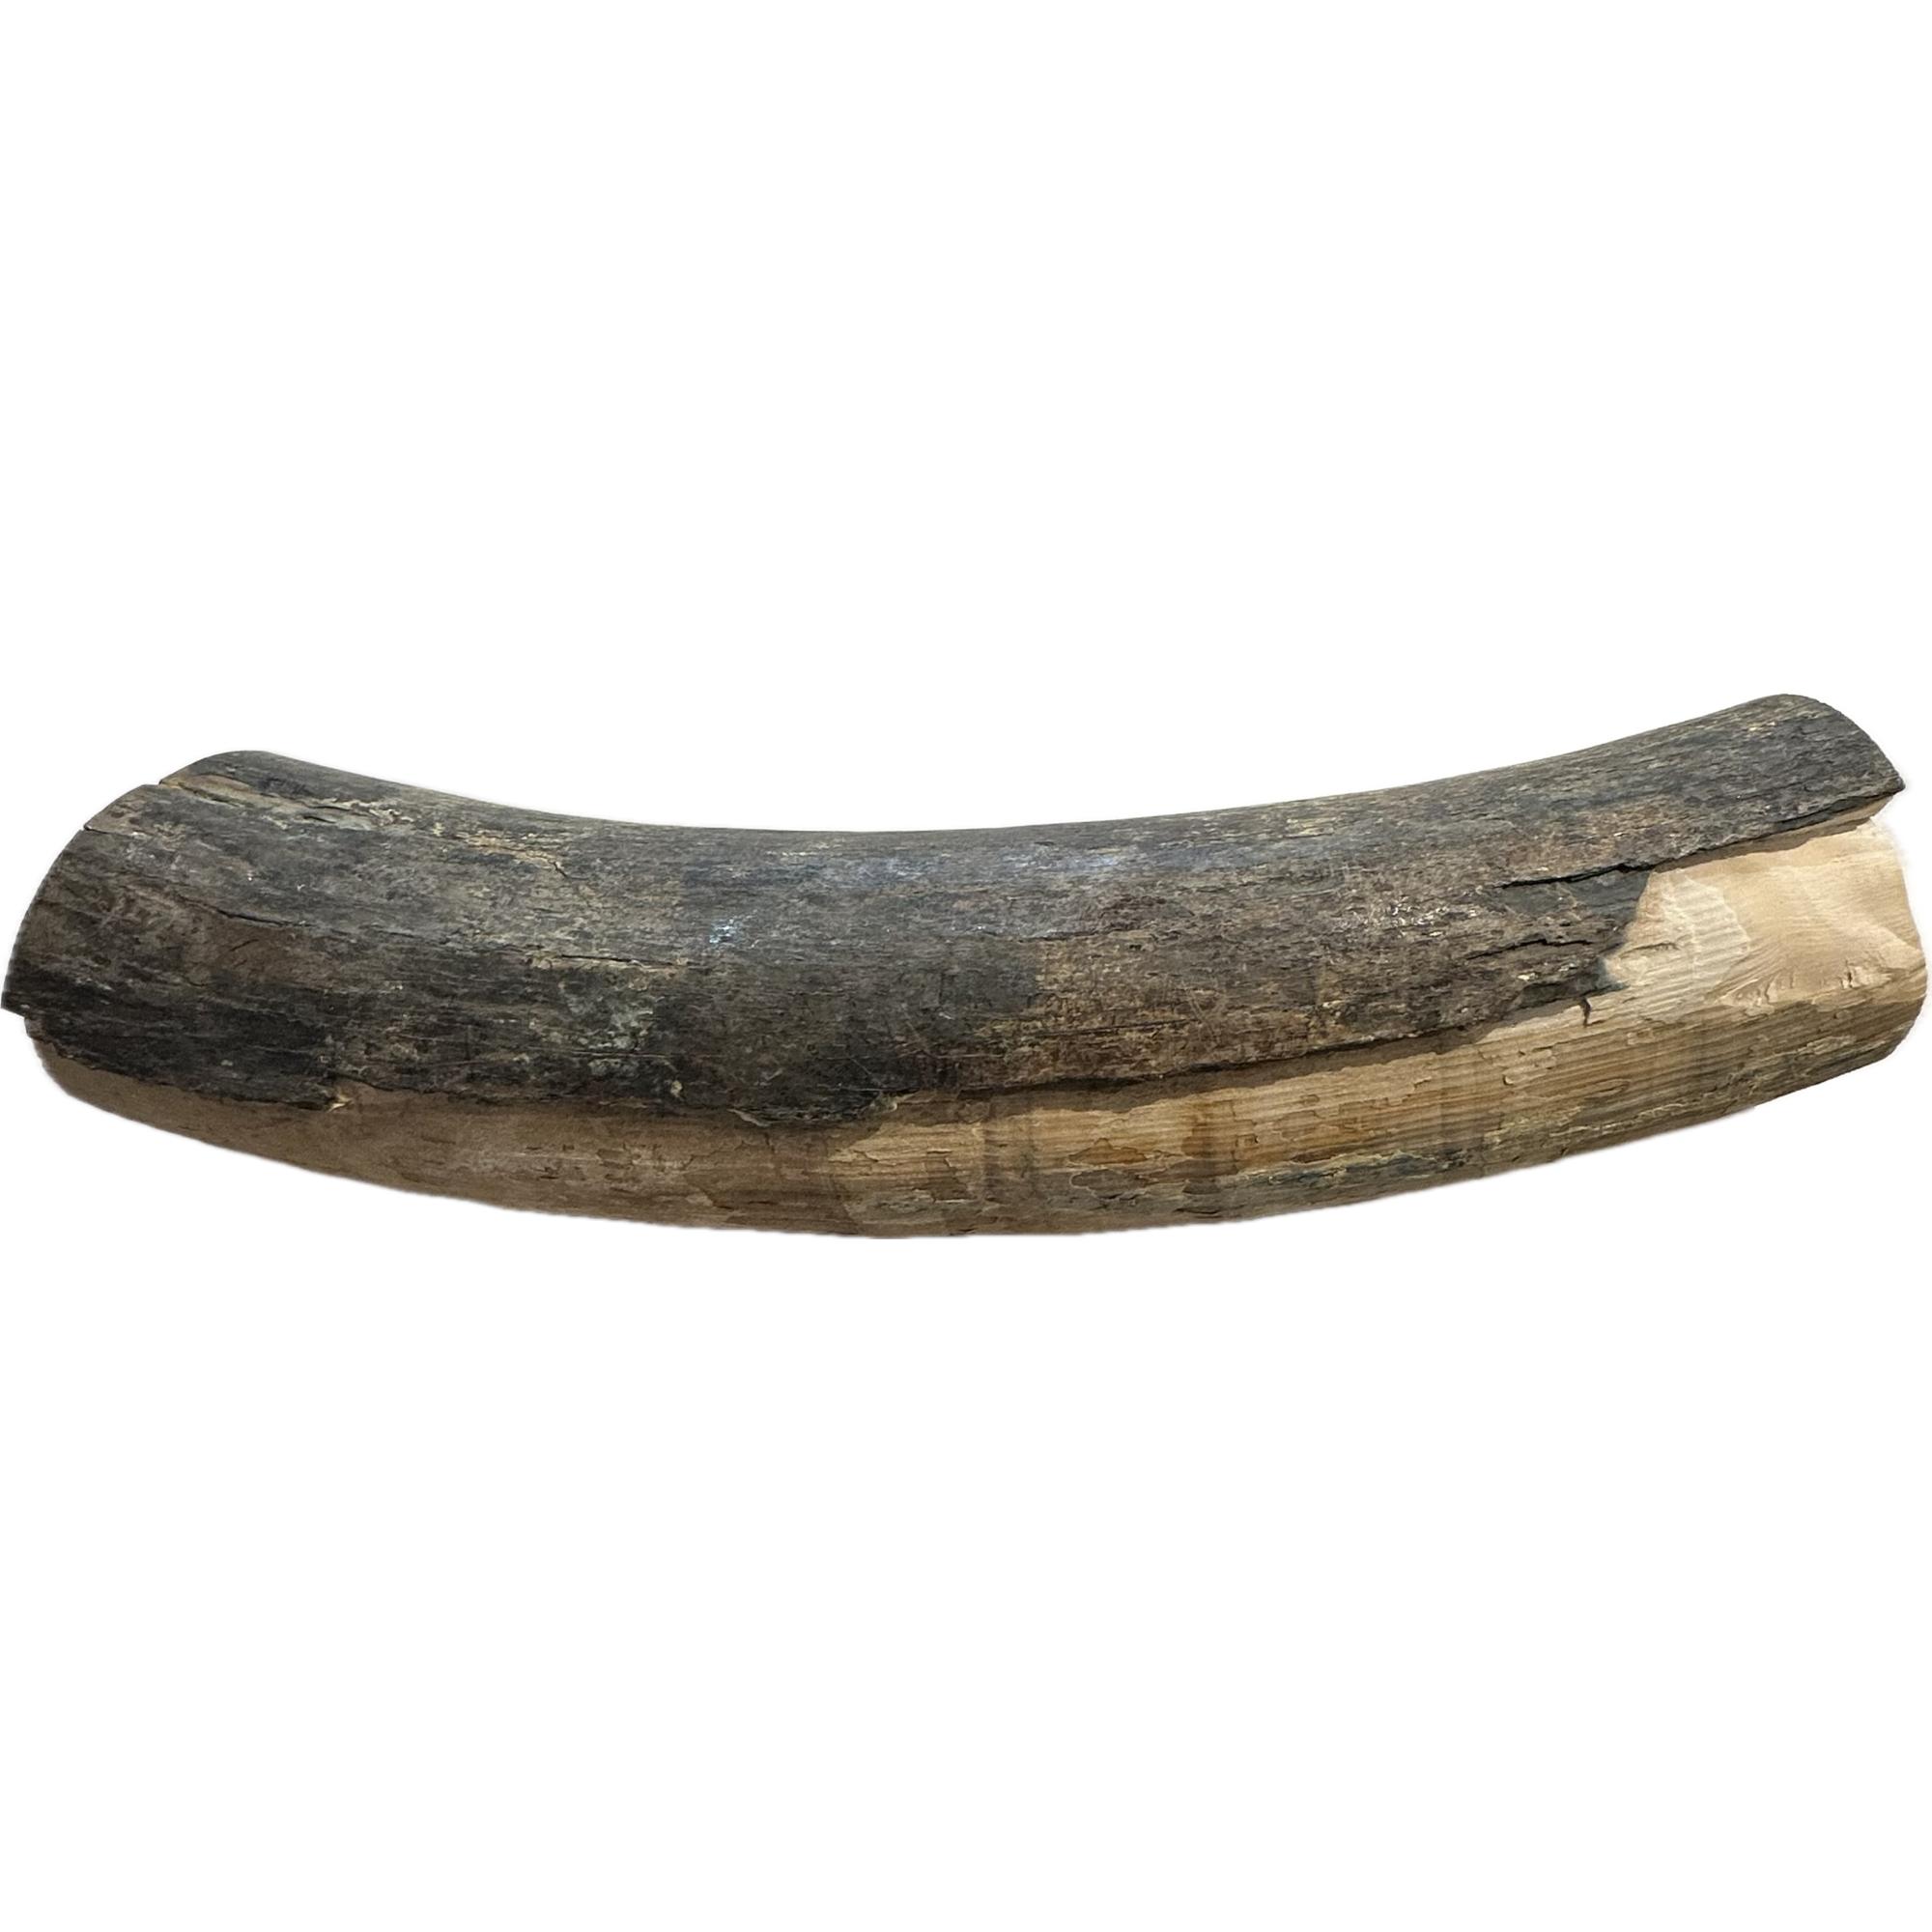 Mammoth Tusk section Prehistoric Online